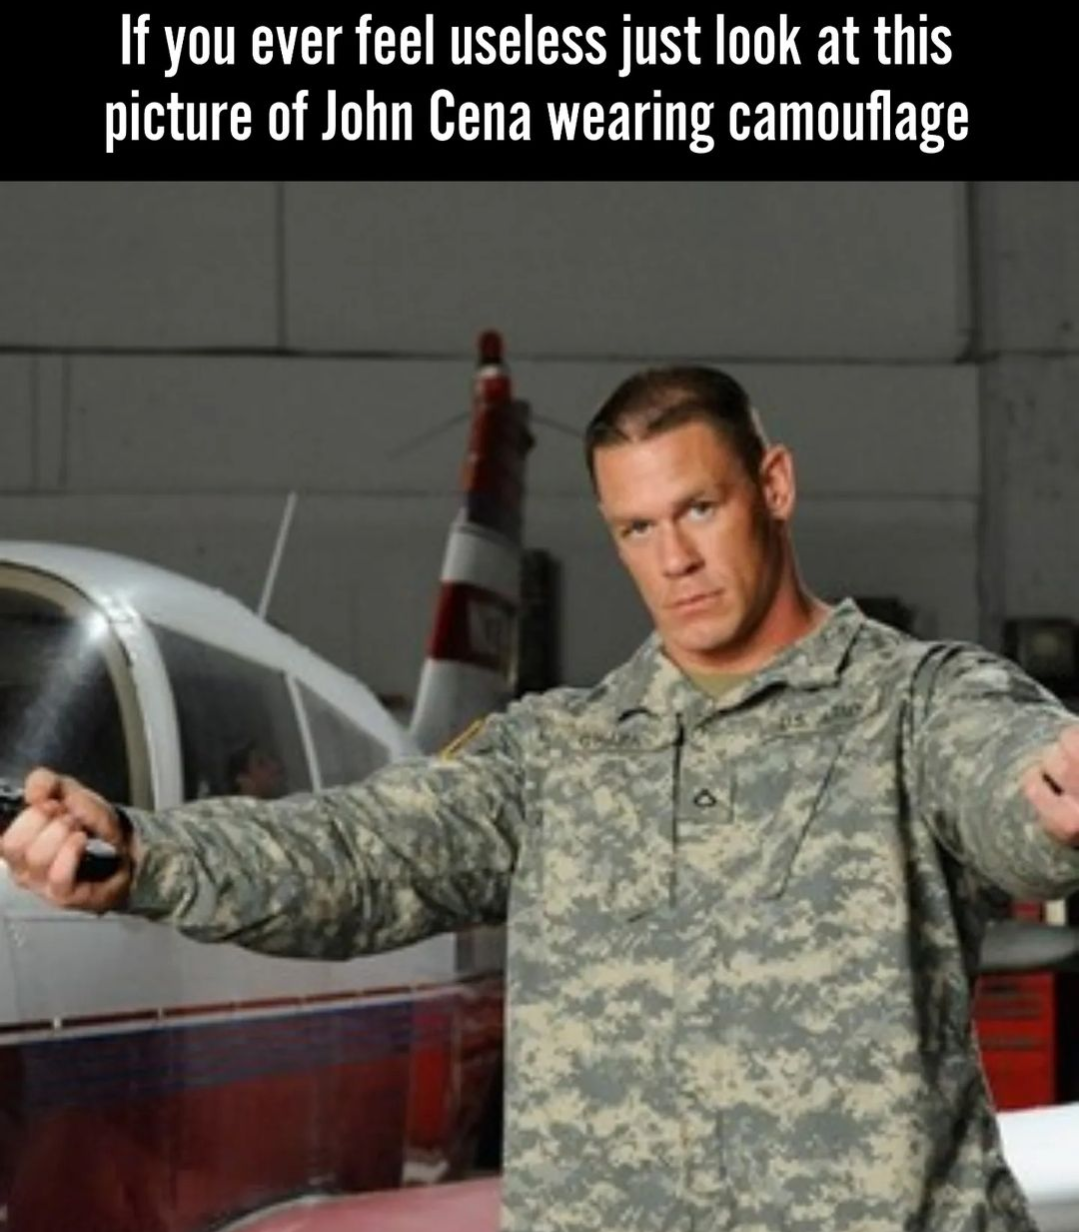 Well, his name is John Cena